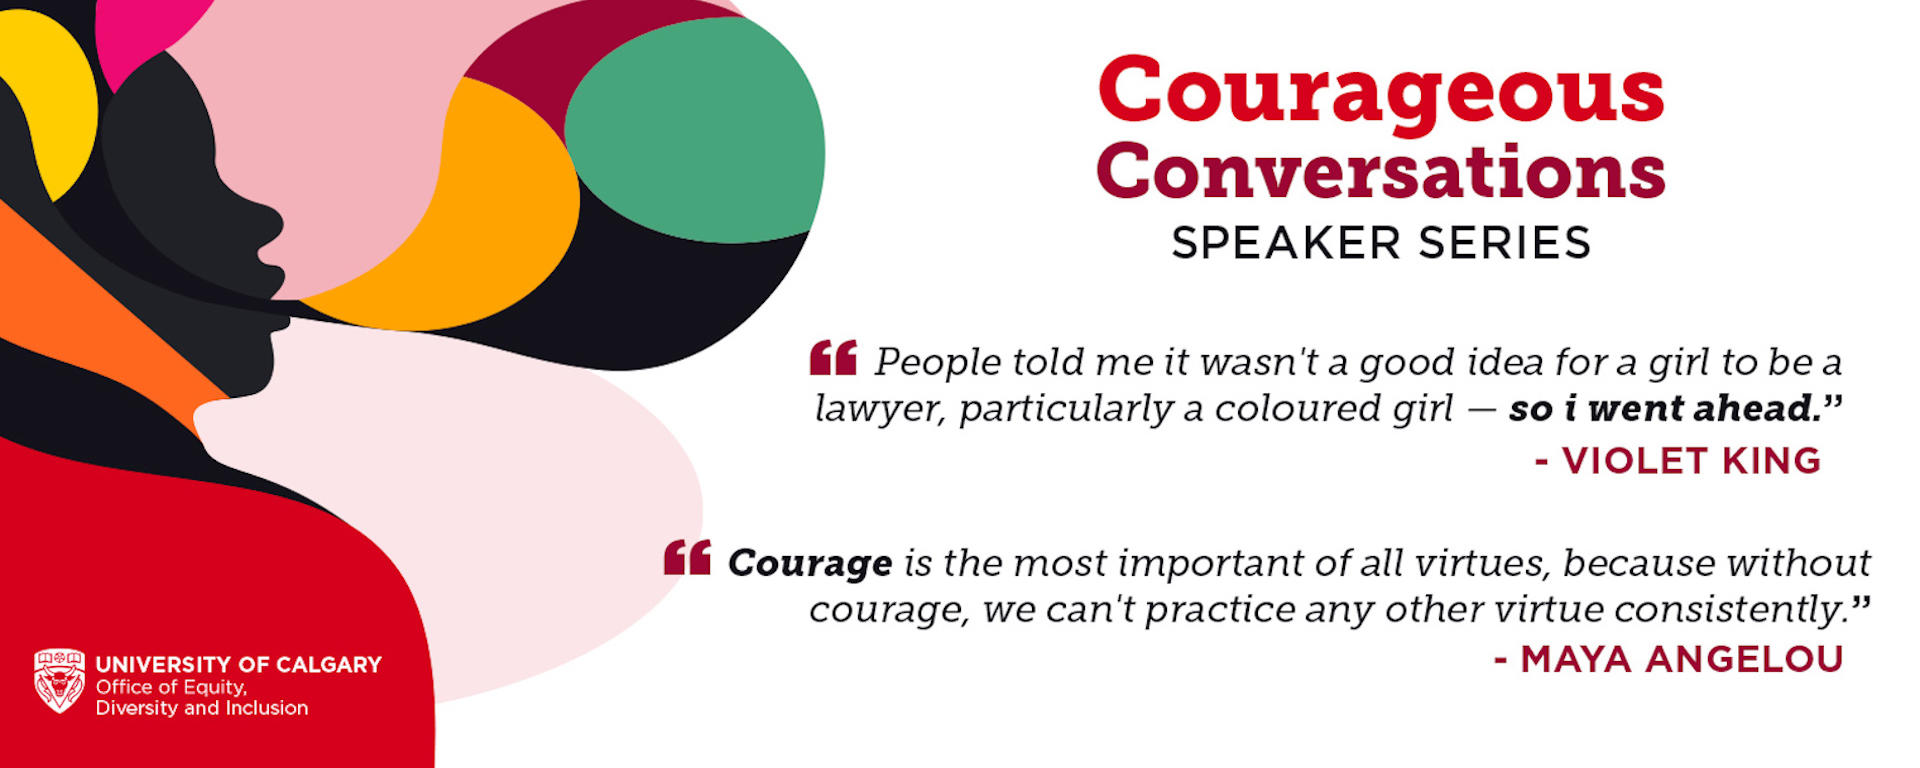 Courageous Conversations speaker series